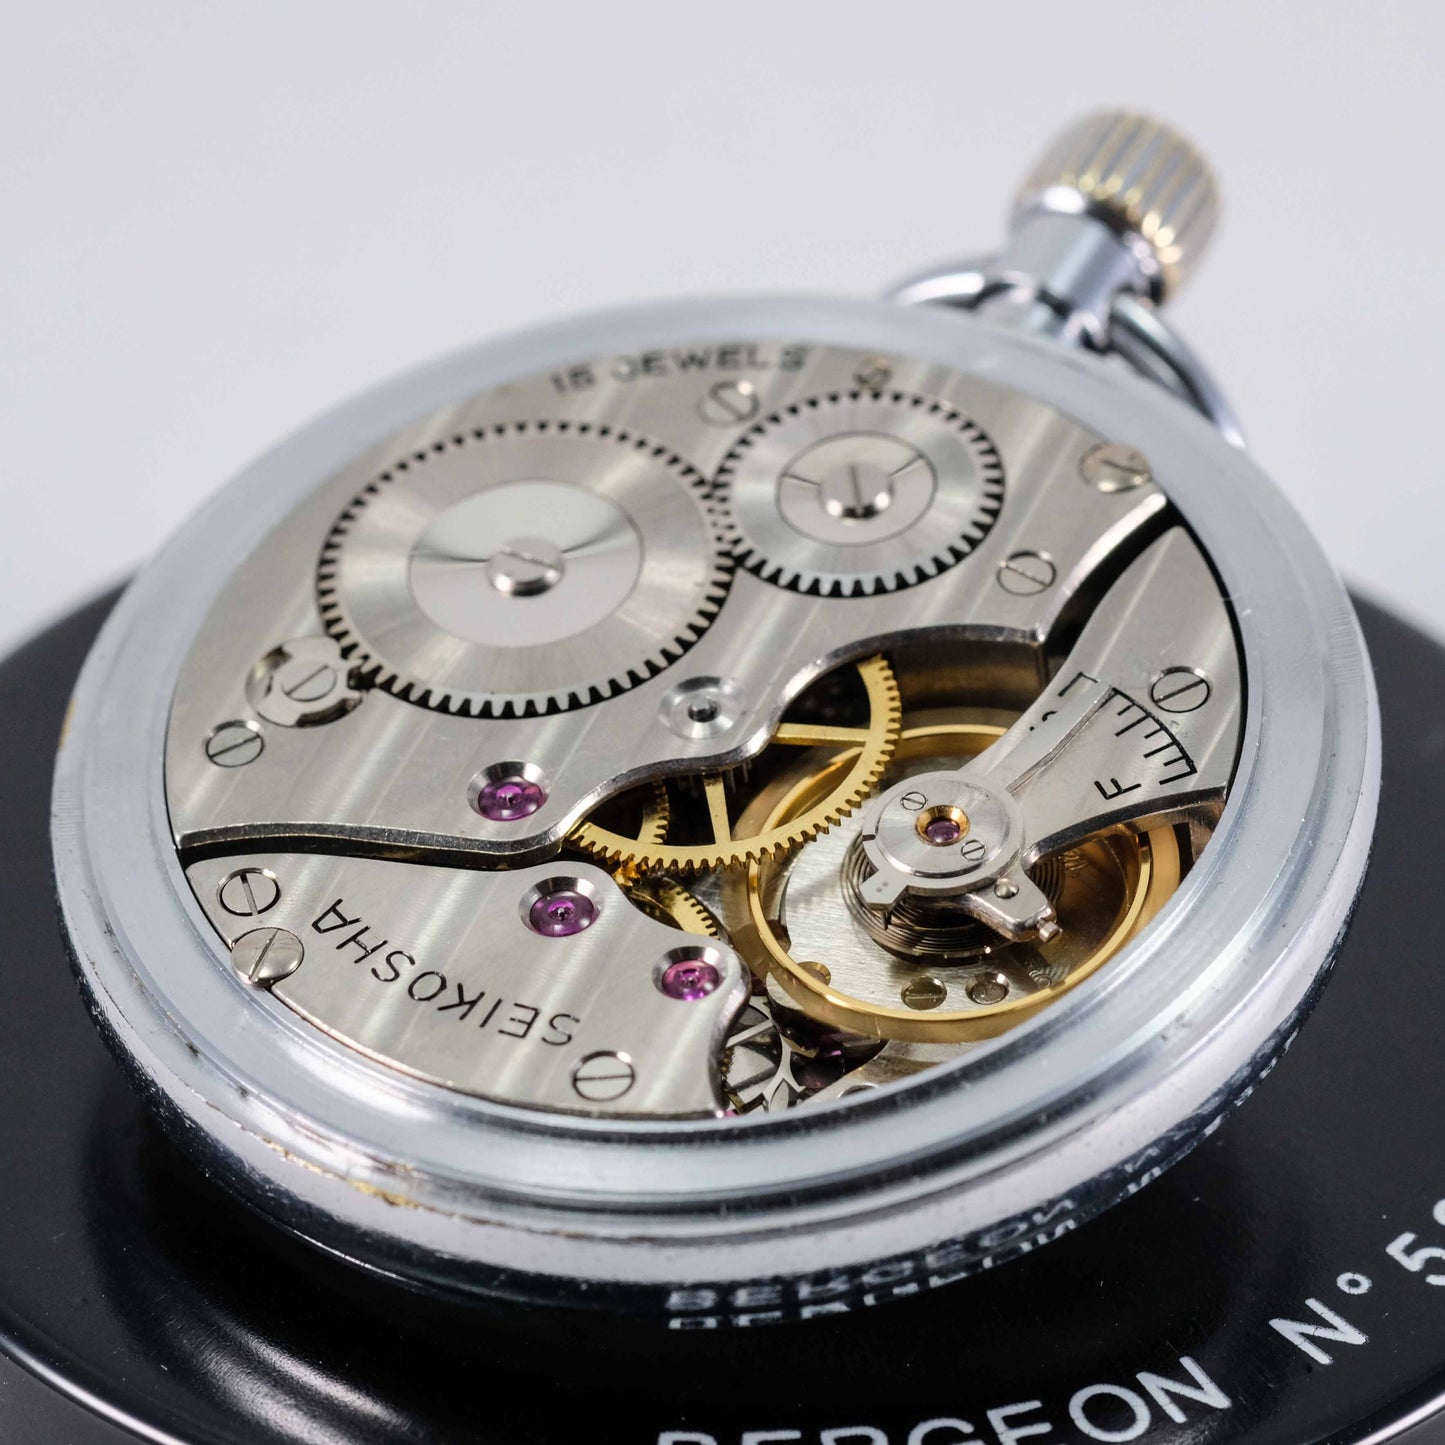 1964 Seiko Seikosha Precision Second Setting Japan National Railway Pocket Watch